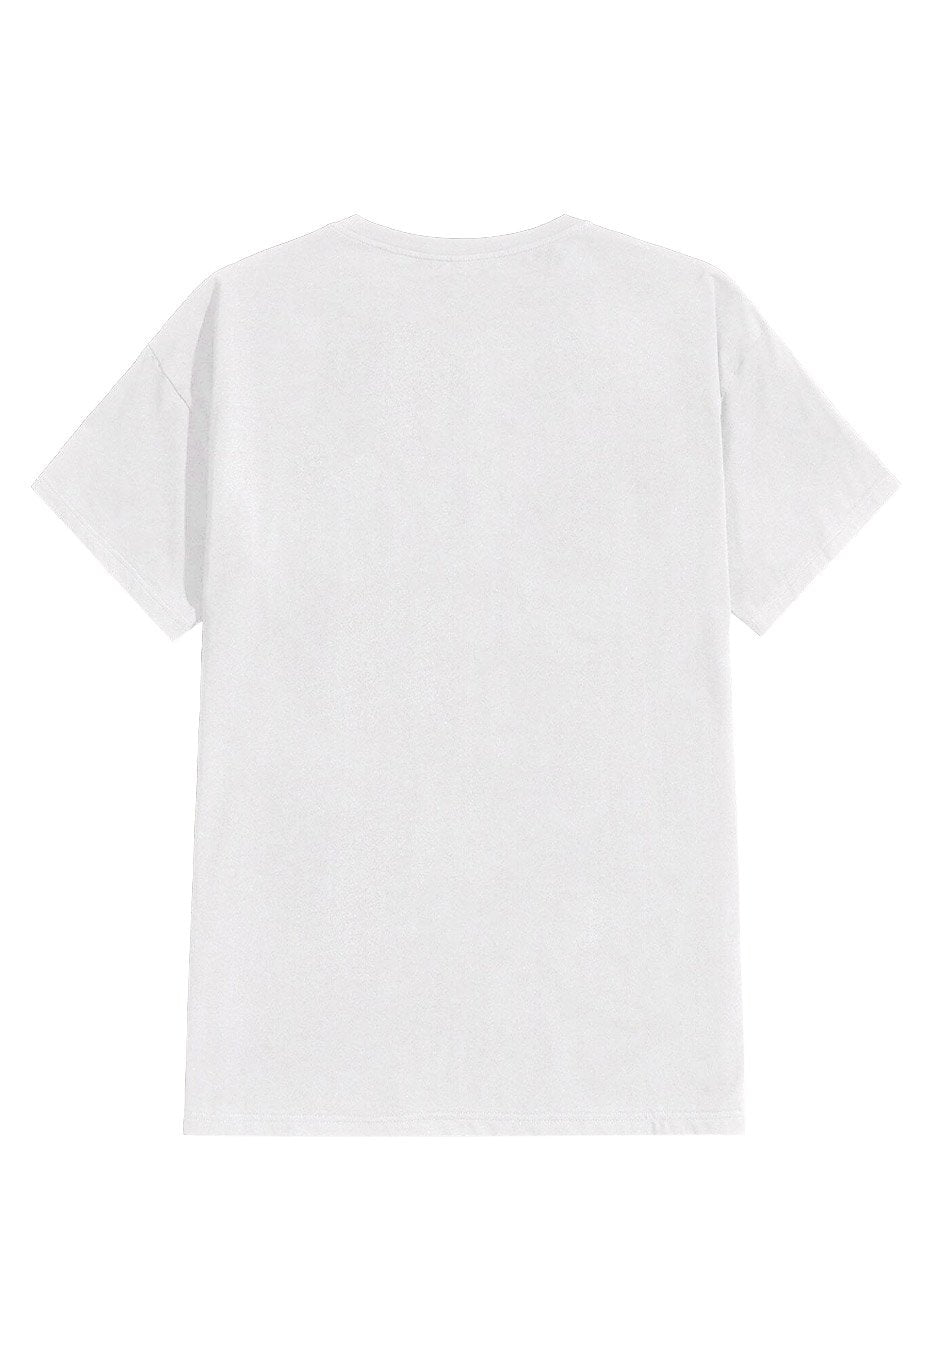 Heaven Shall Burn - 3D Logo White - T-Shirt